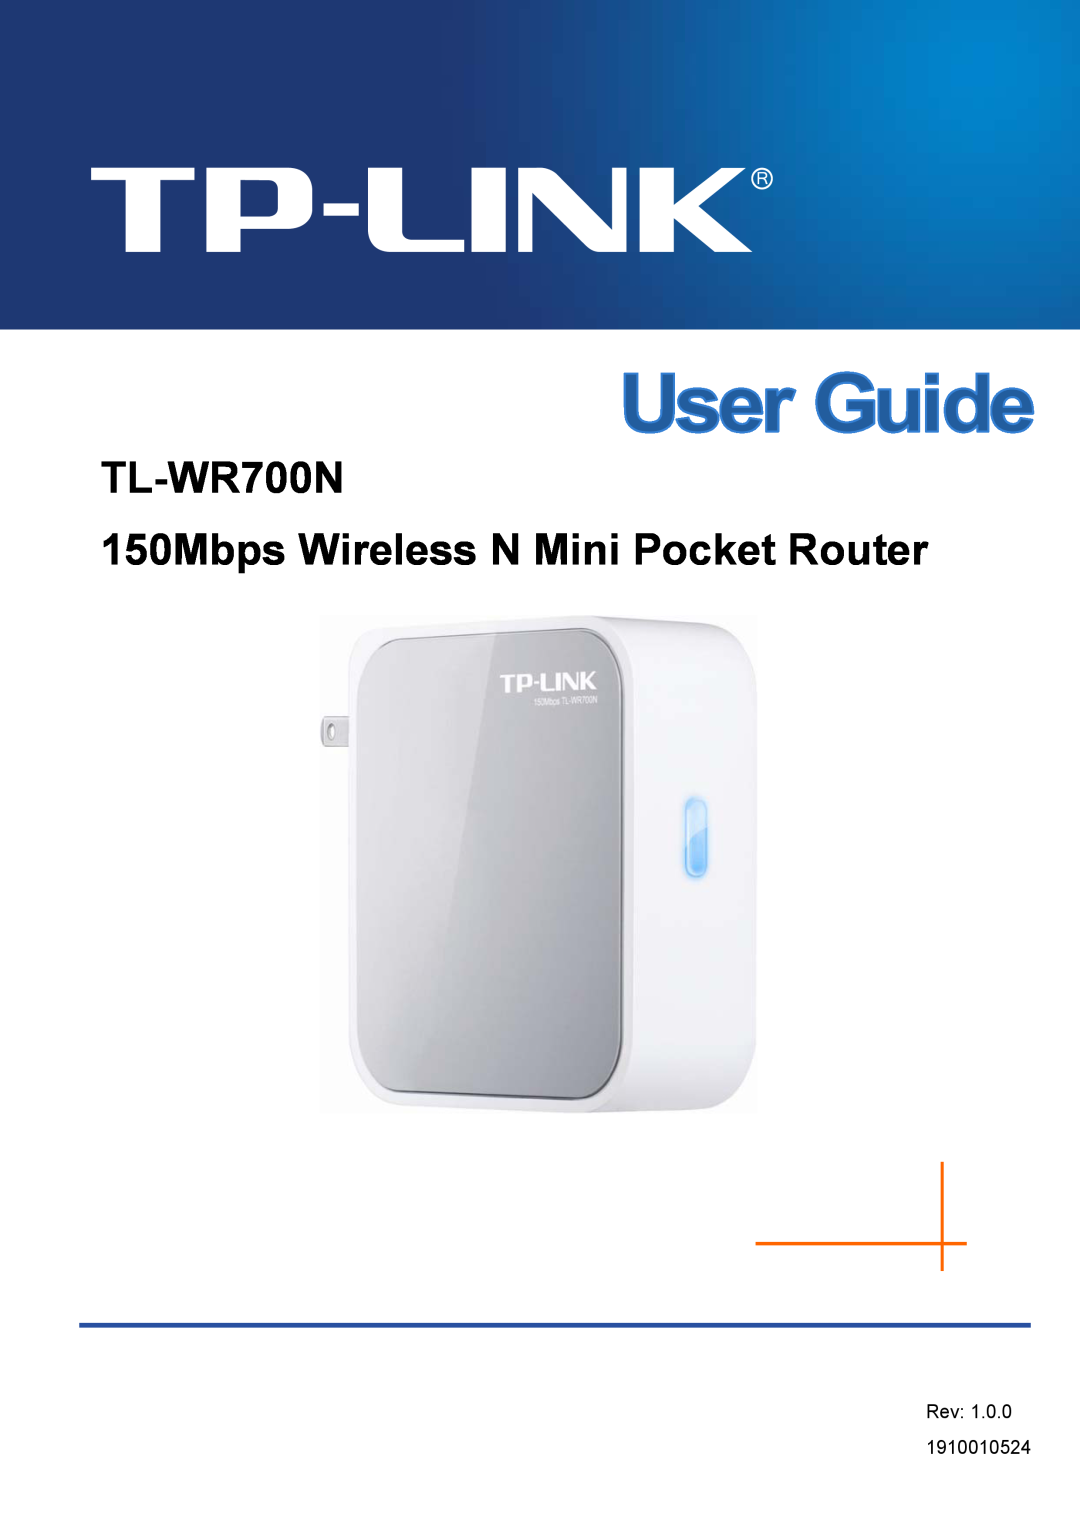 TP-Link manual TL-WR700N 150Mbps Wireless N Mini Pocket Router, Rev 1910010524 